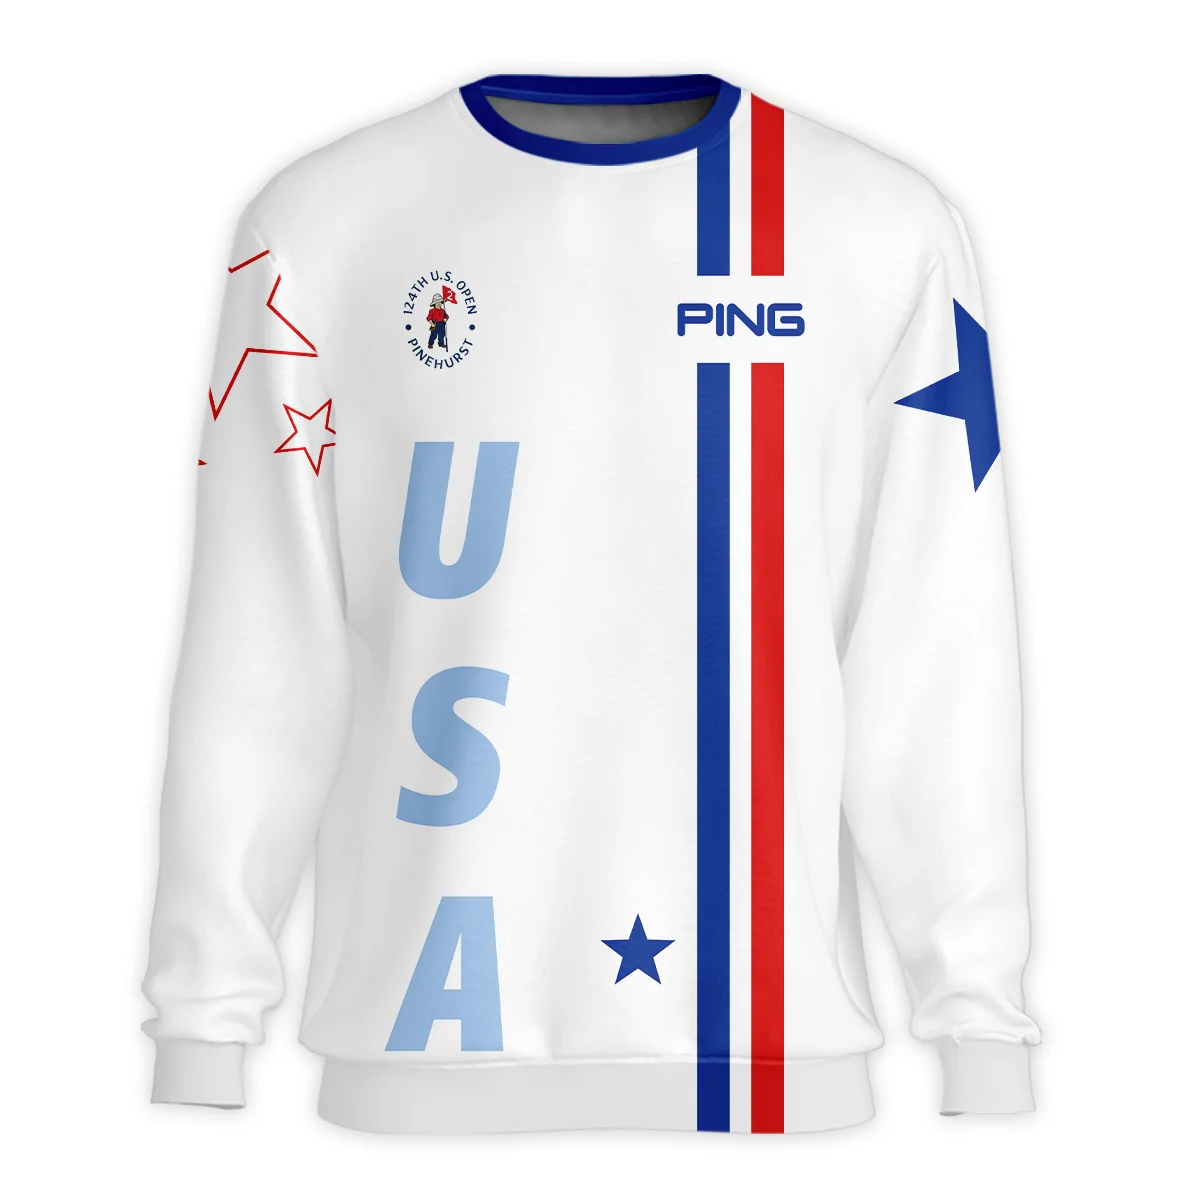 124th U.S. Open Pinehurst Ping Blue Red Line White Unisex Sweatshirt Style Classic Sweatshirt